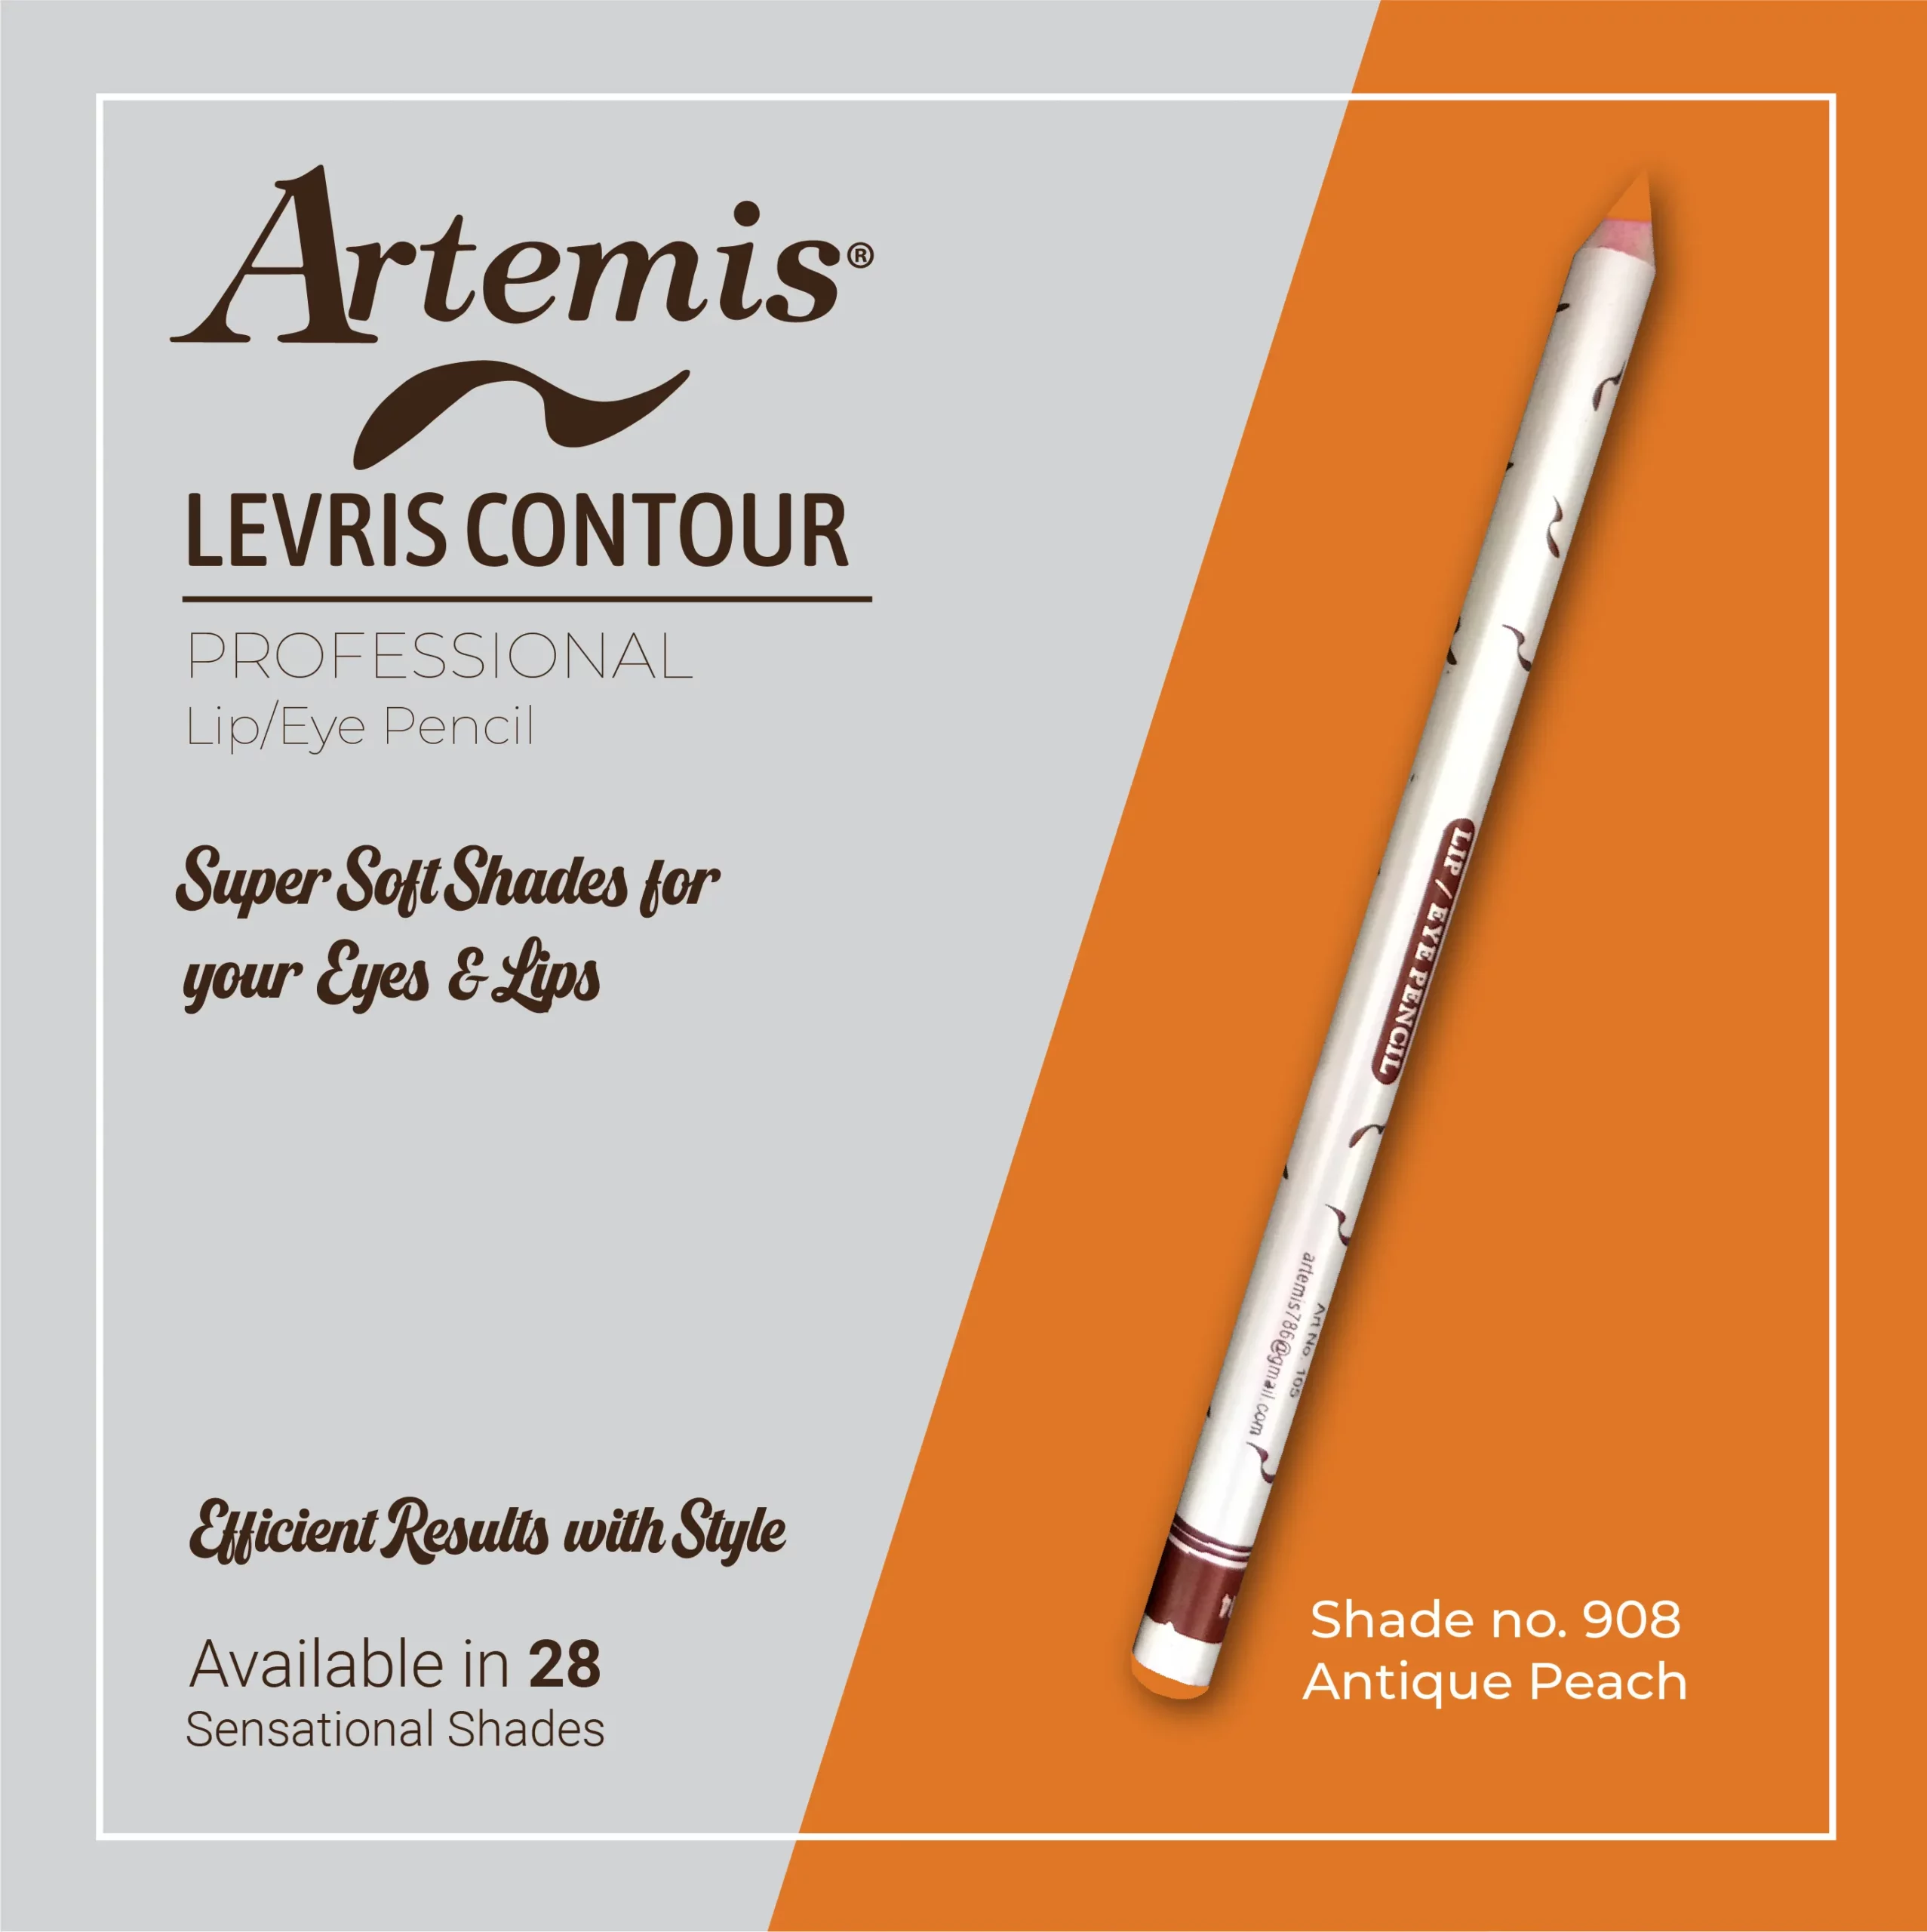 Artemis Lip / Eye Pencil 908 Antique Peach